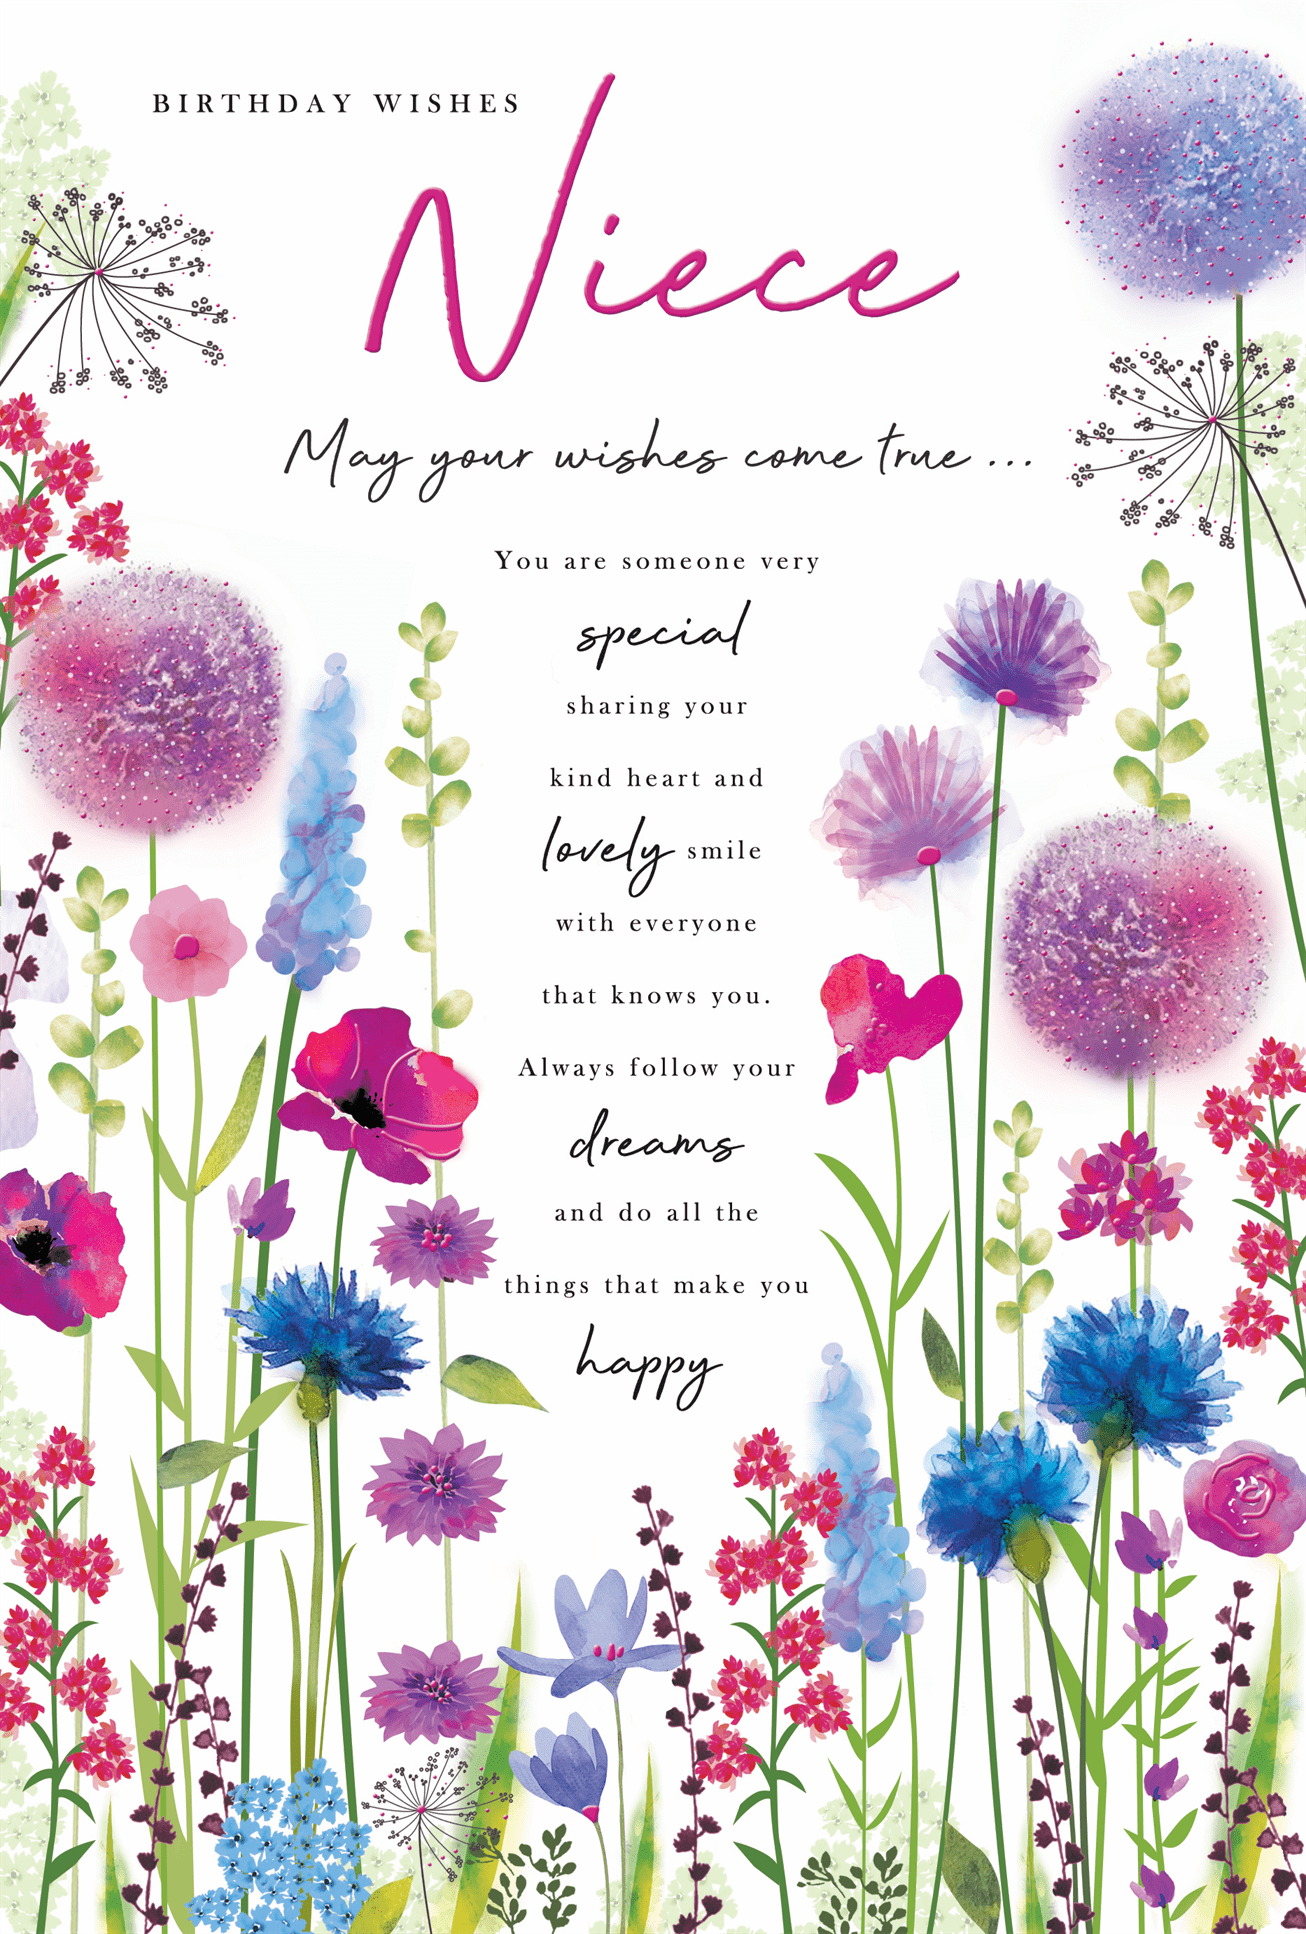 Niece birthday card- flowers and sentimental verse